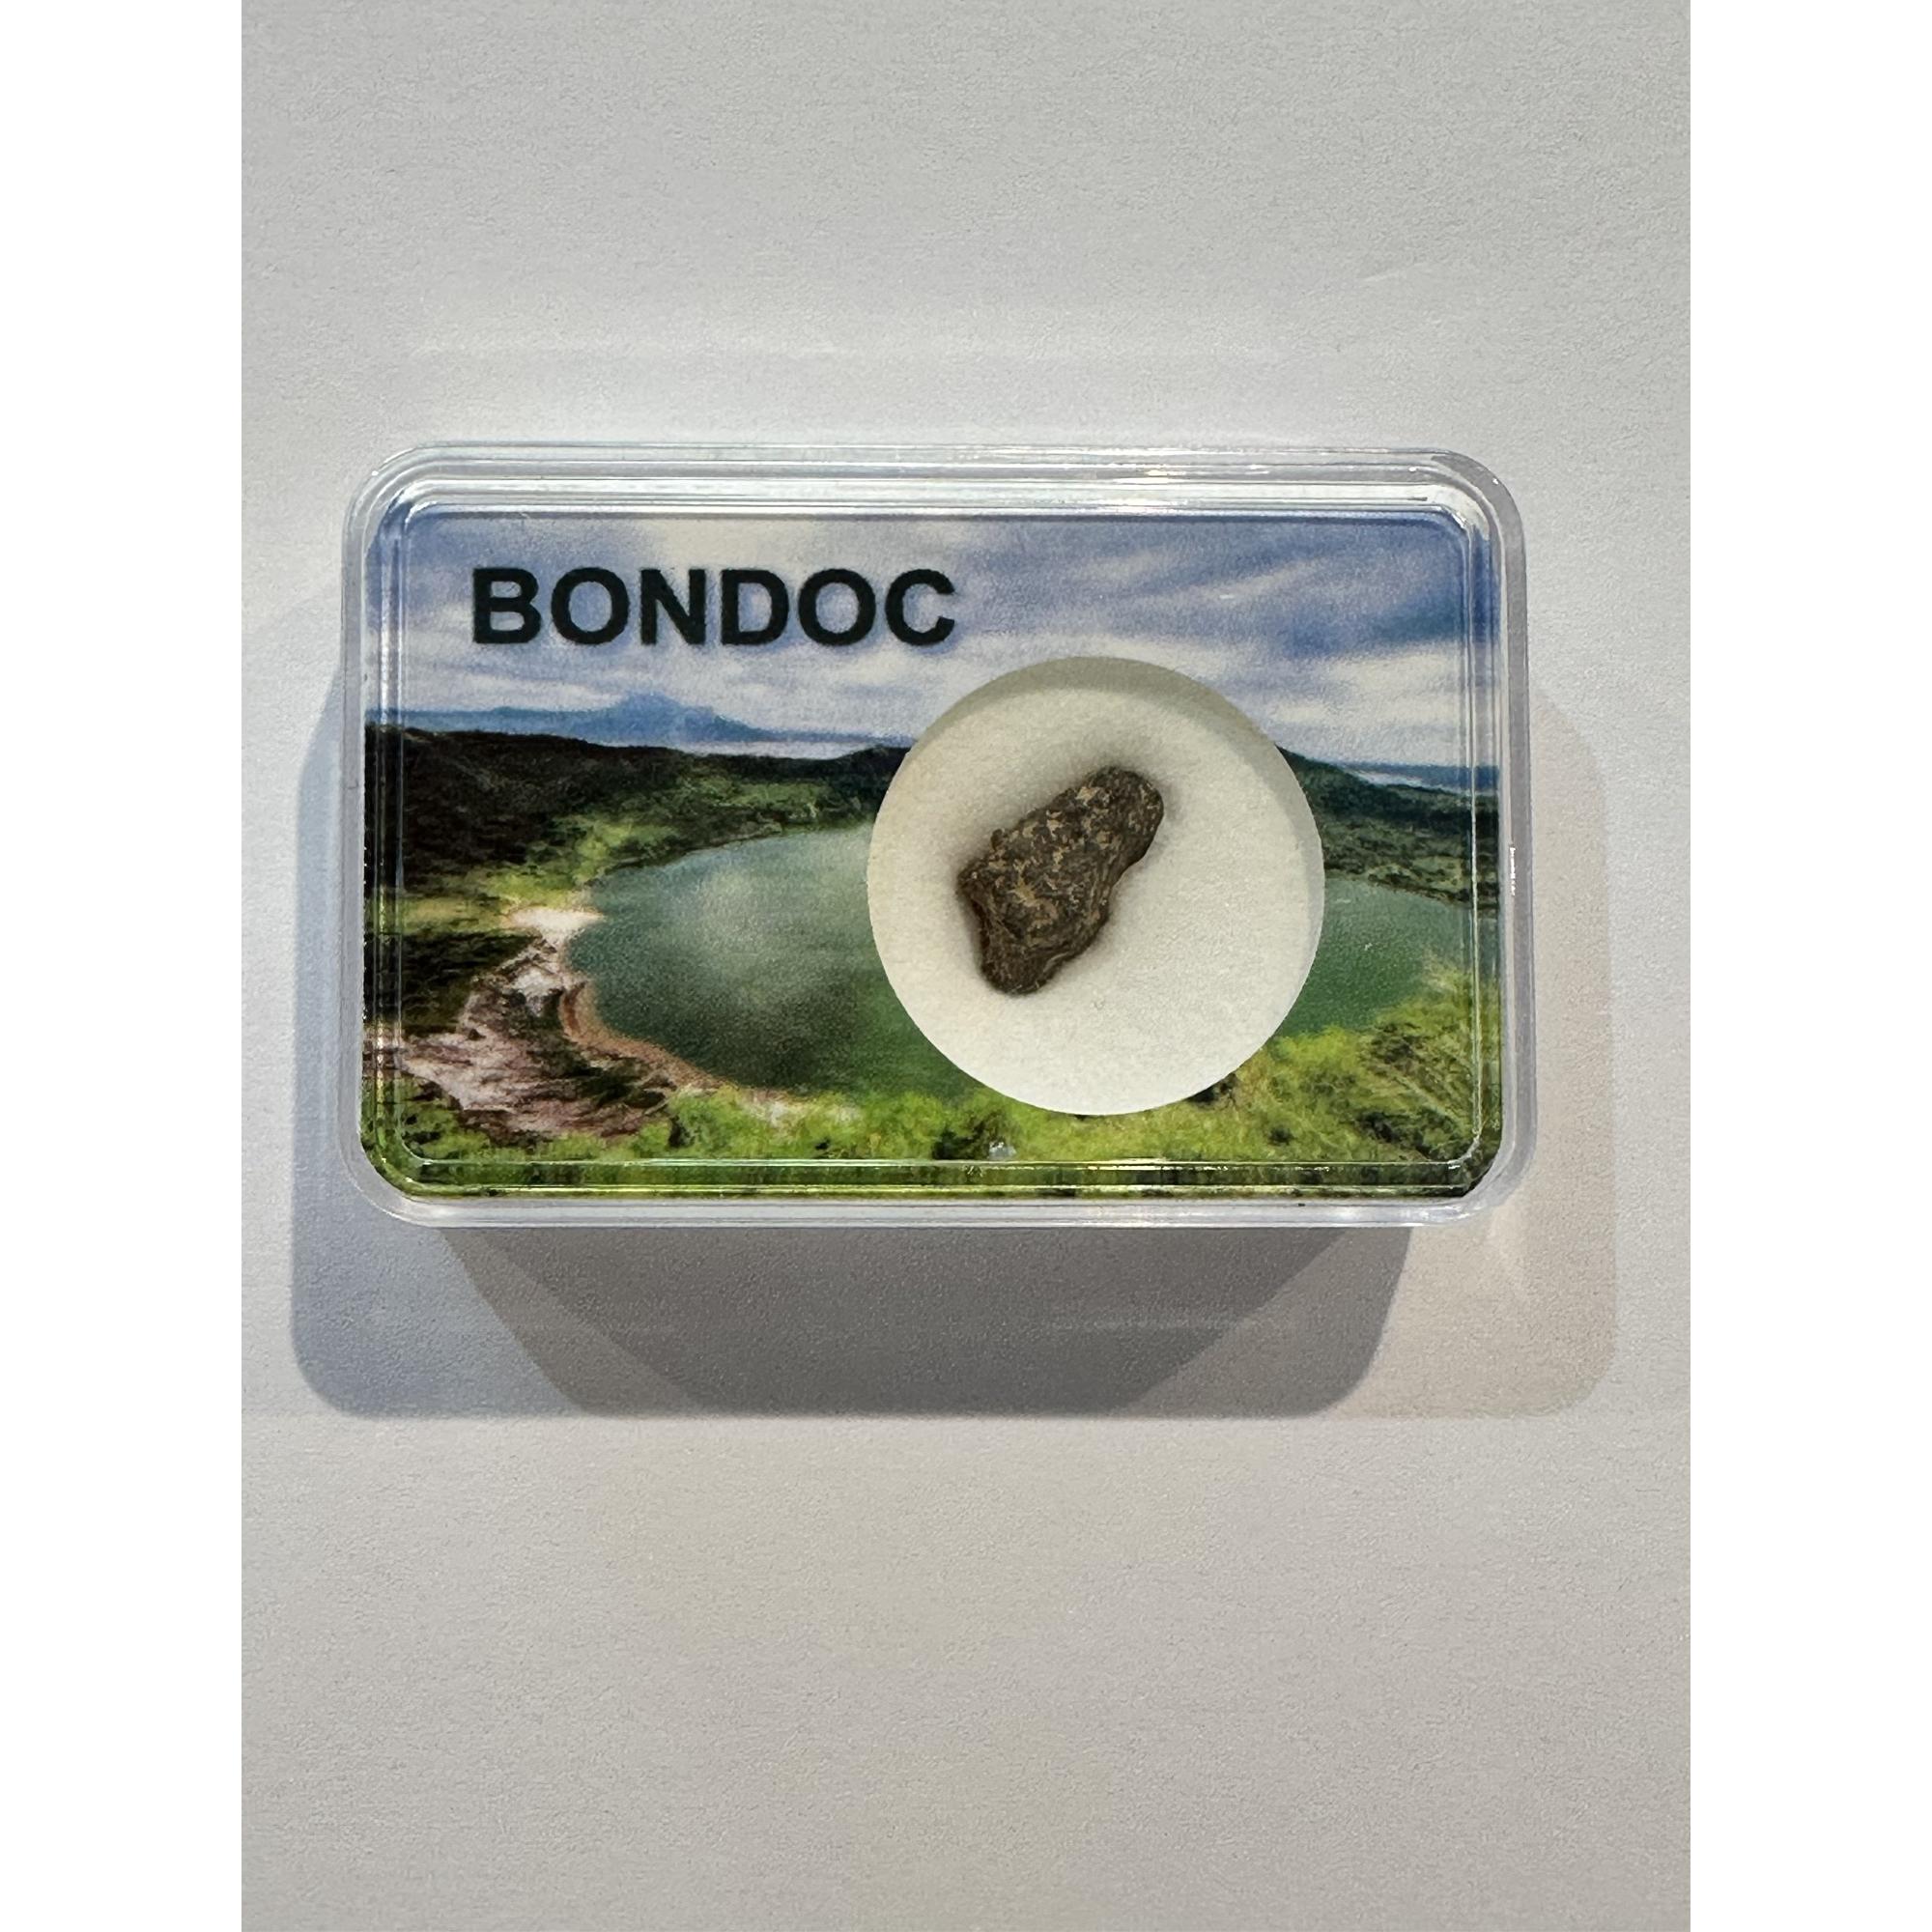 Bondoc meteorite, Mesosiderite-B4 Prehistoric Online